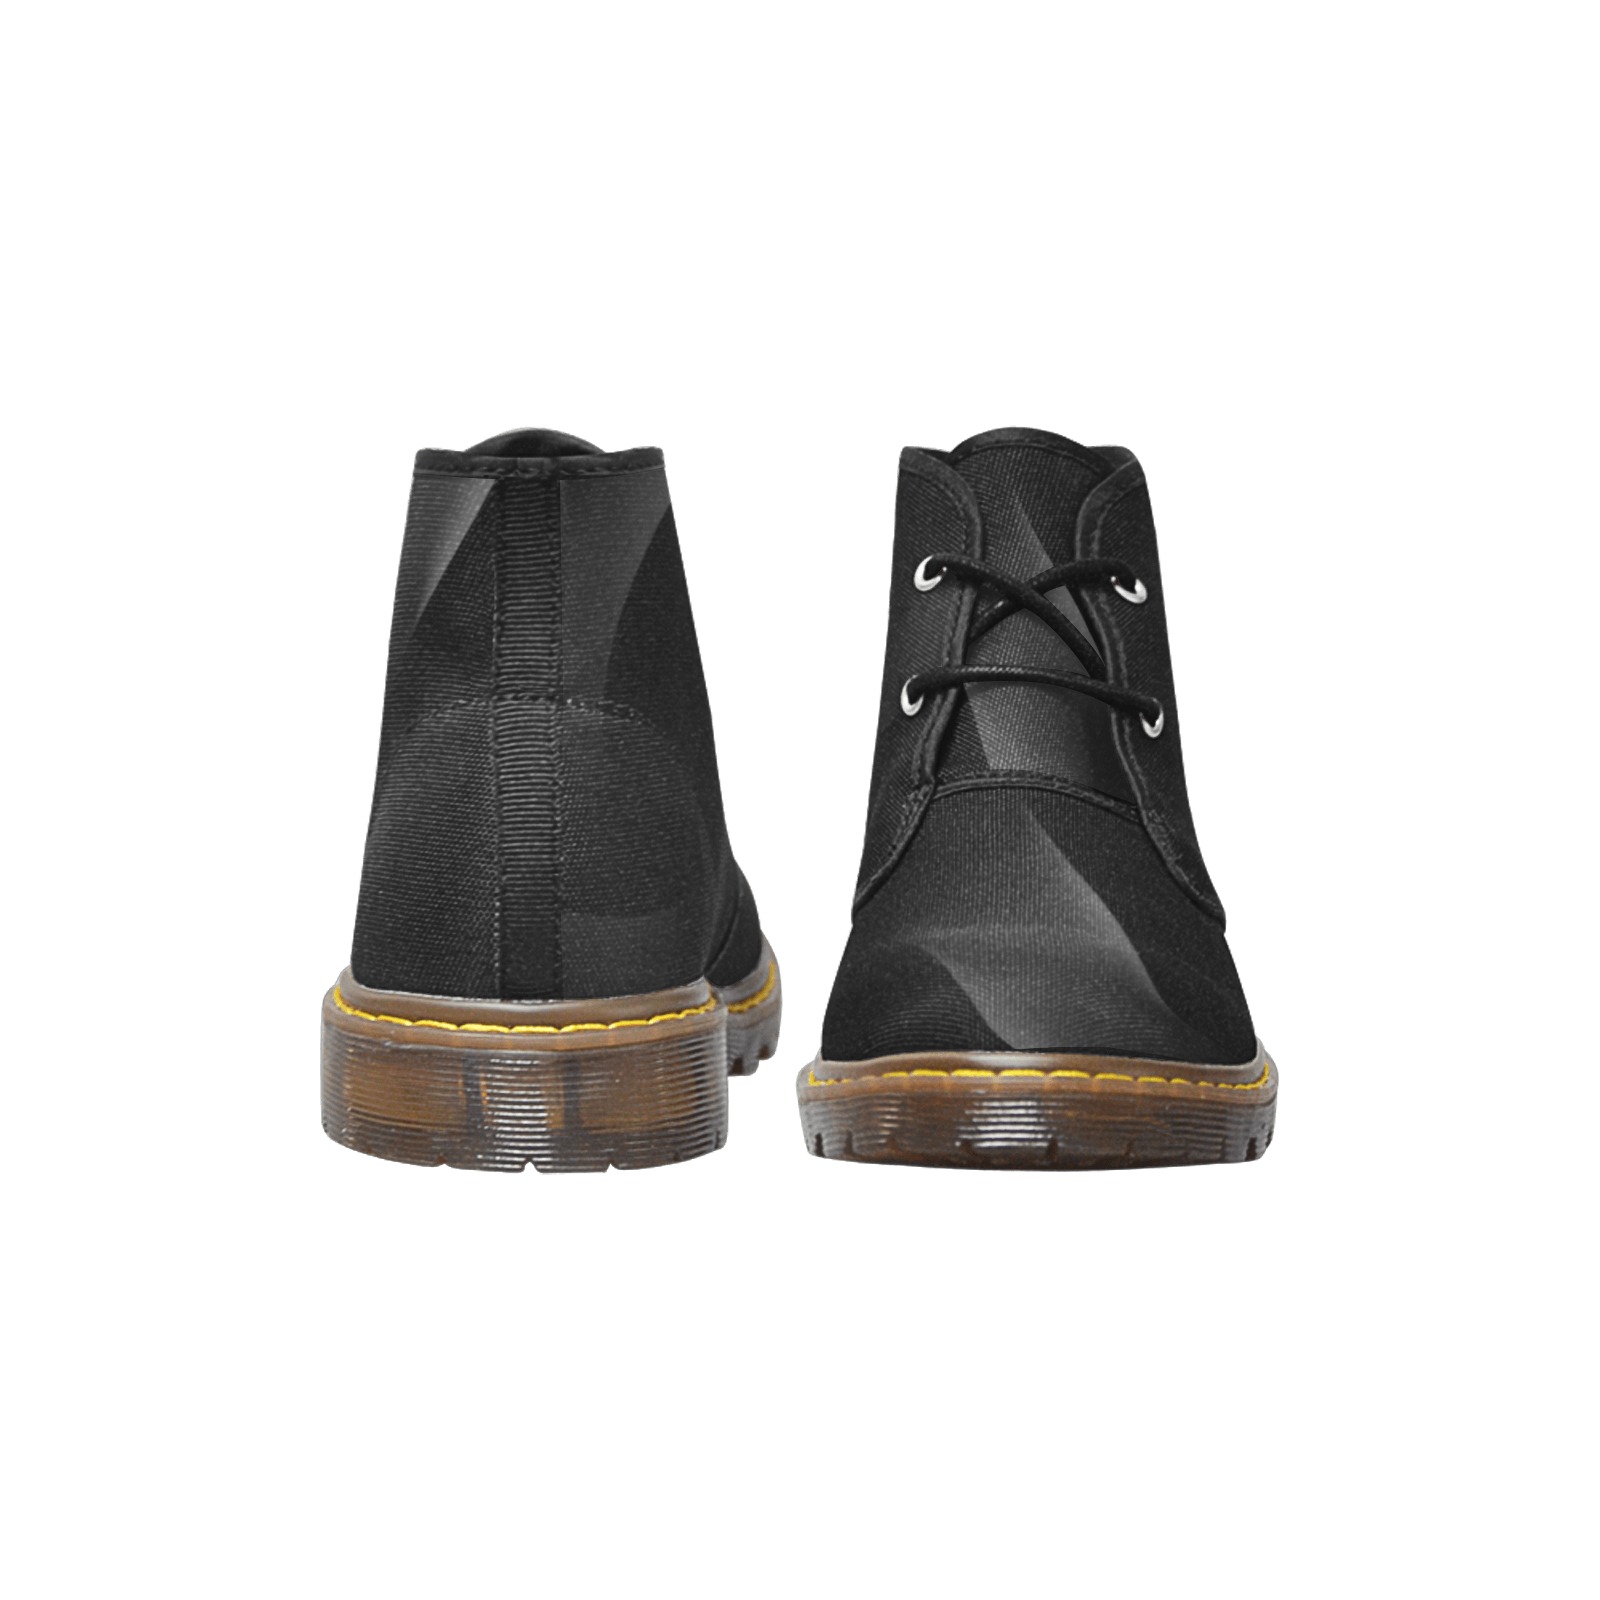 Women Chukka Boot - Black 3 Women's Canvas Chukka Boots (Model 2402-1)